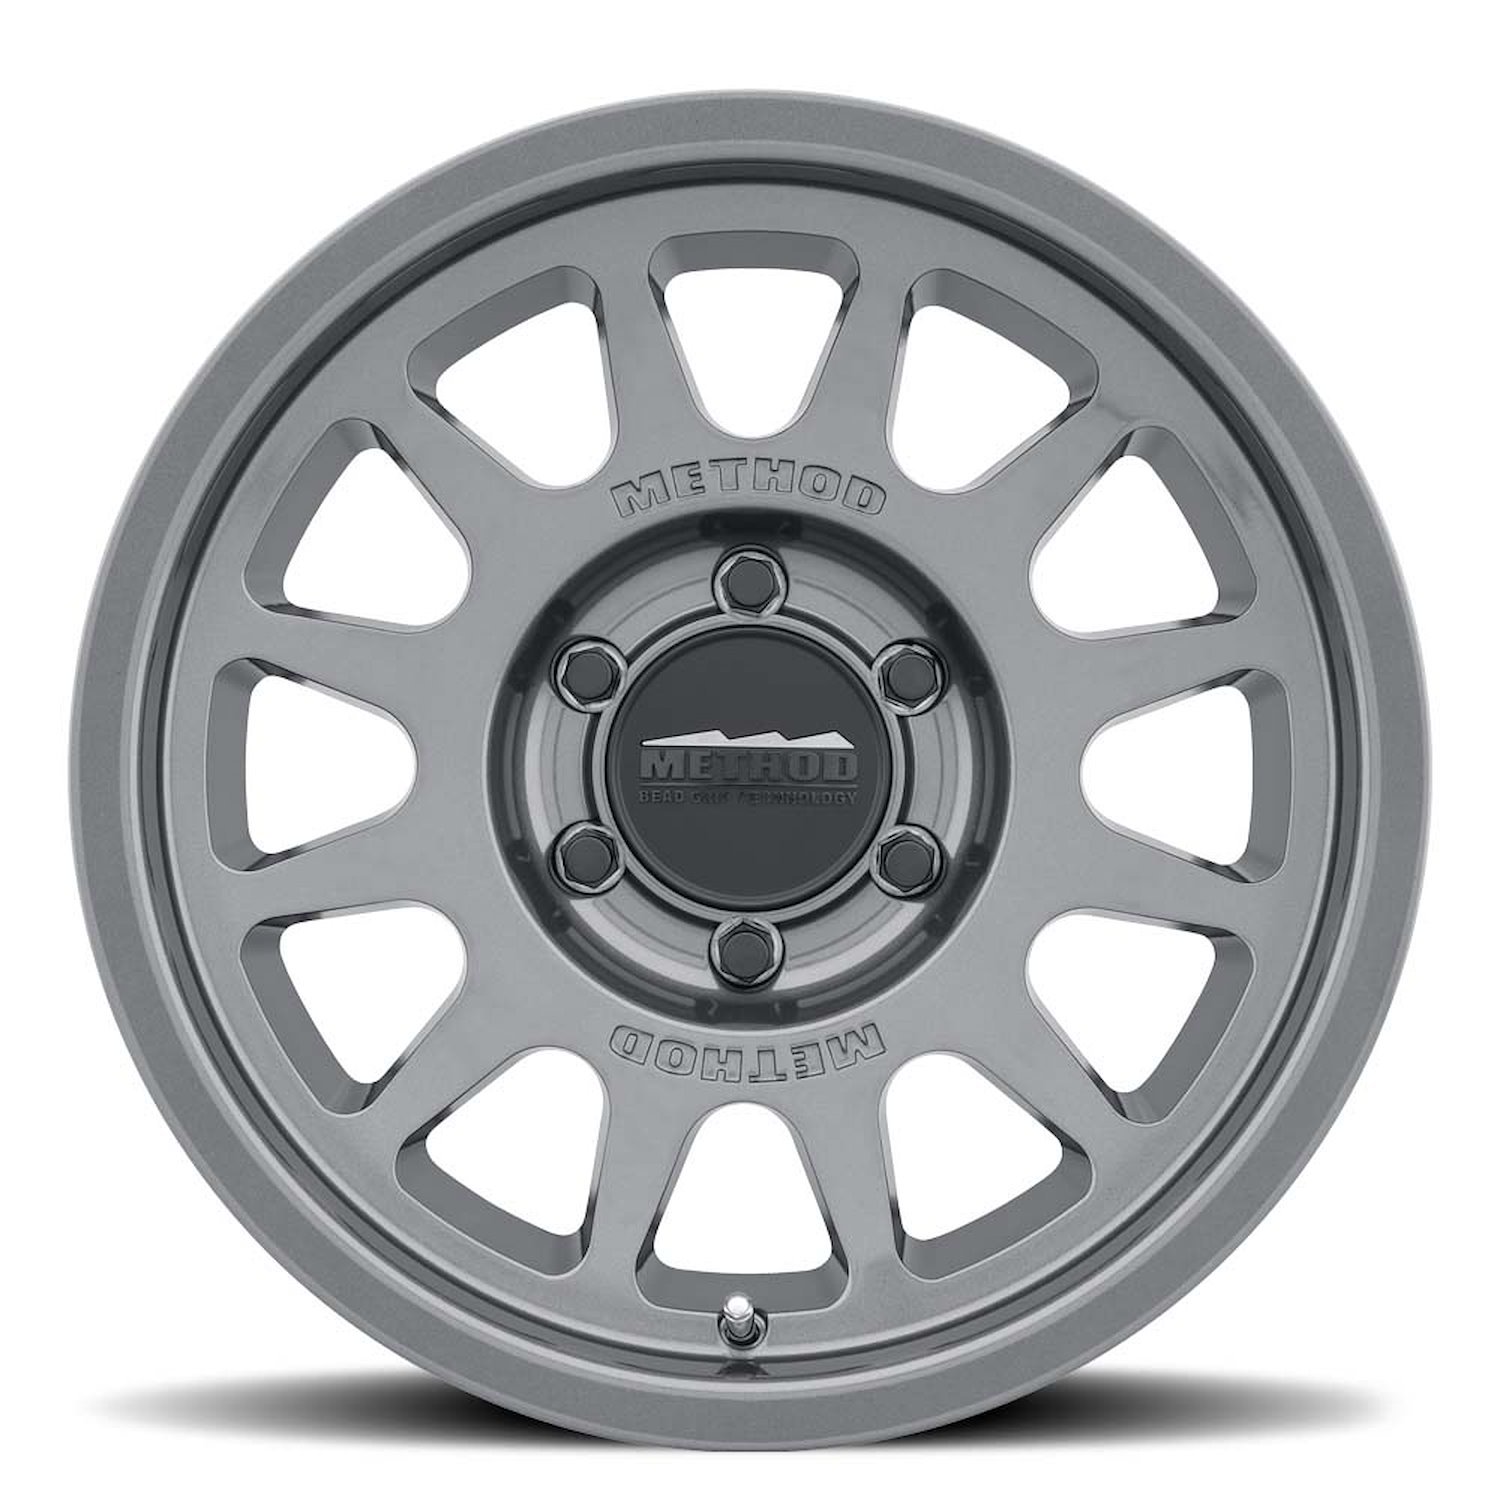 MR70378560800 TRAIL MR703 Bead Grip Wheel [Size: 17" x 8.5"] Gloss Titanium